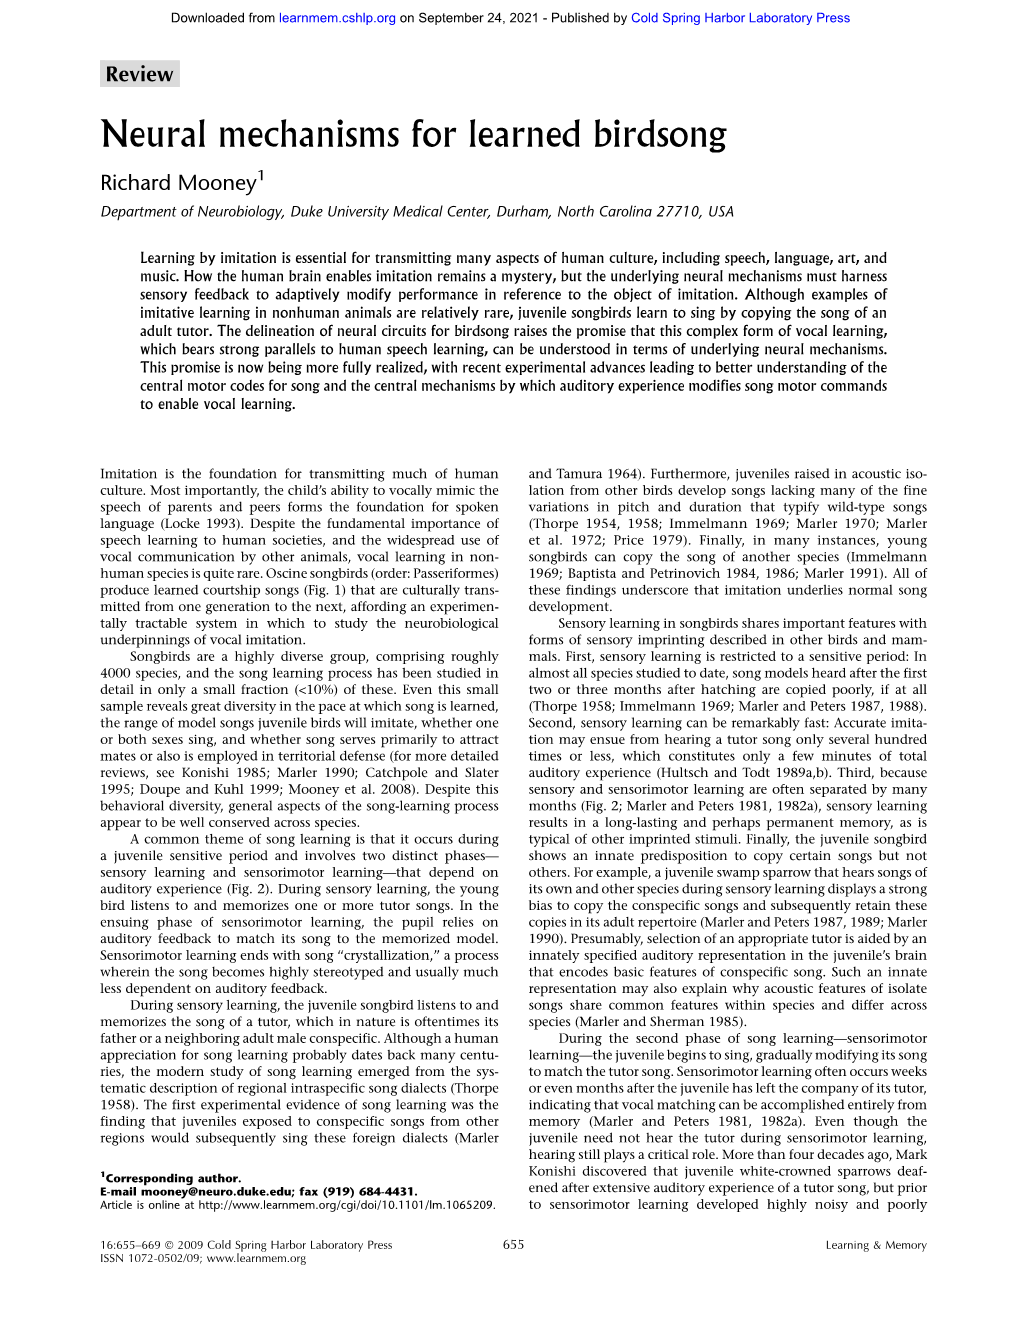 Neural Mechanisms for Learned Birdsong Richard Mooney1 Department of Neurobiology, Duke University Medical Center, Durham, North Carolina 27710, USA